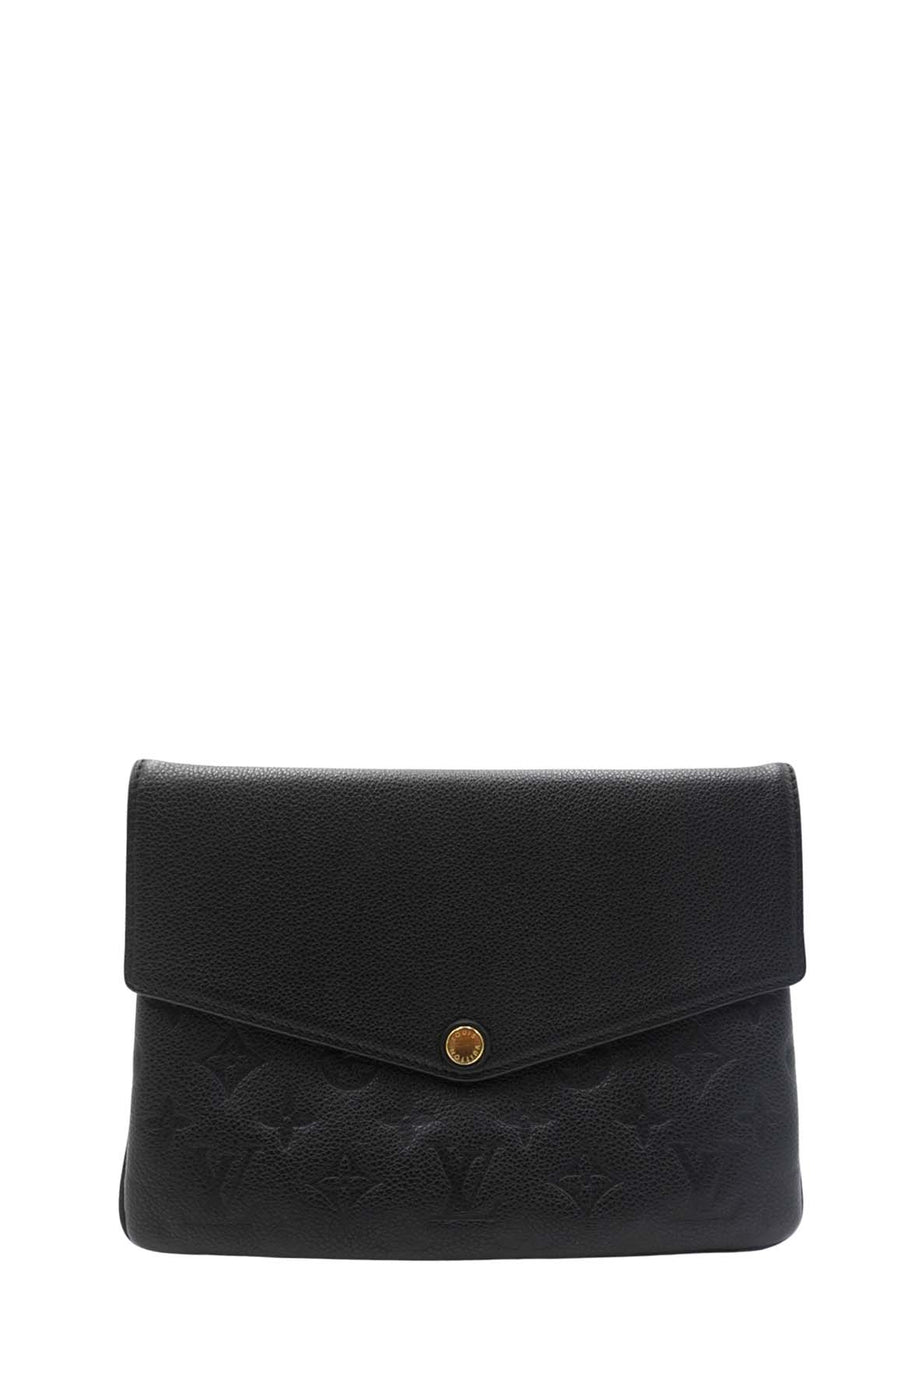 Twice Handbag Monogram Empreinte Leather Crossbody Handbag Black